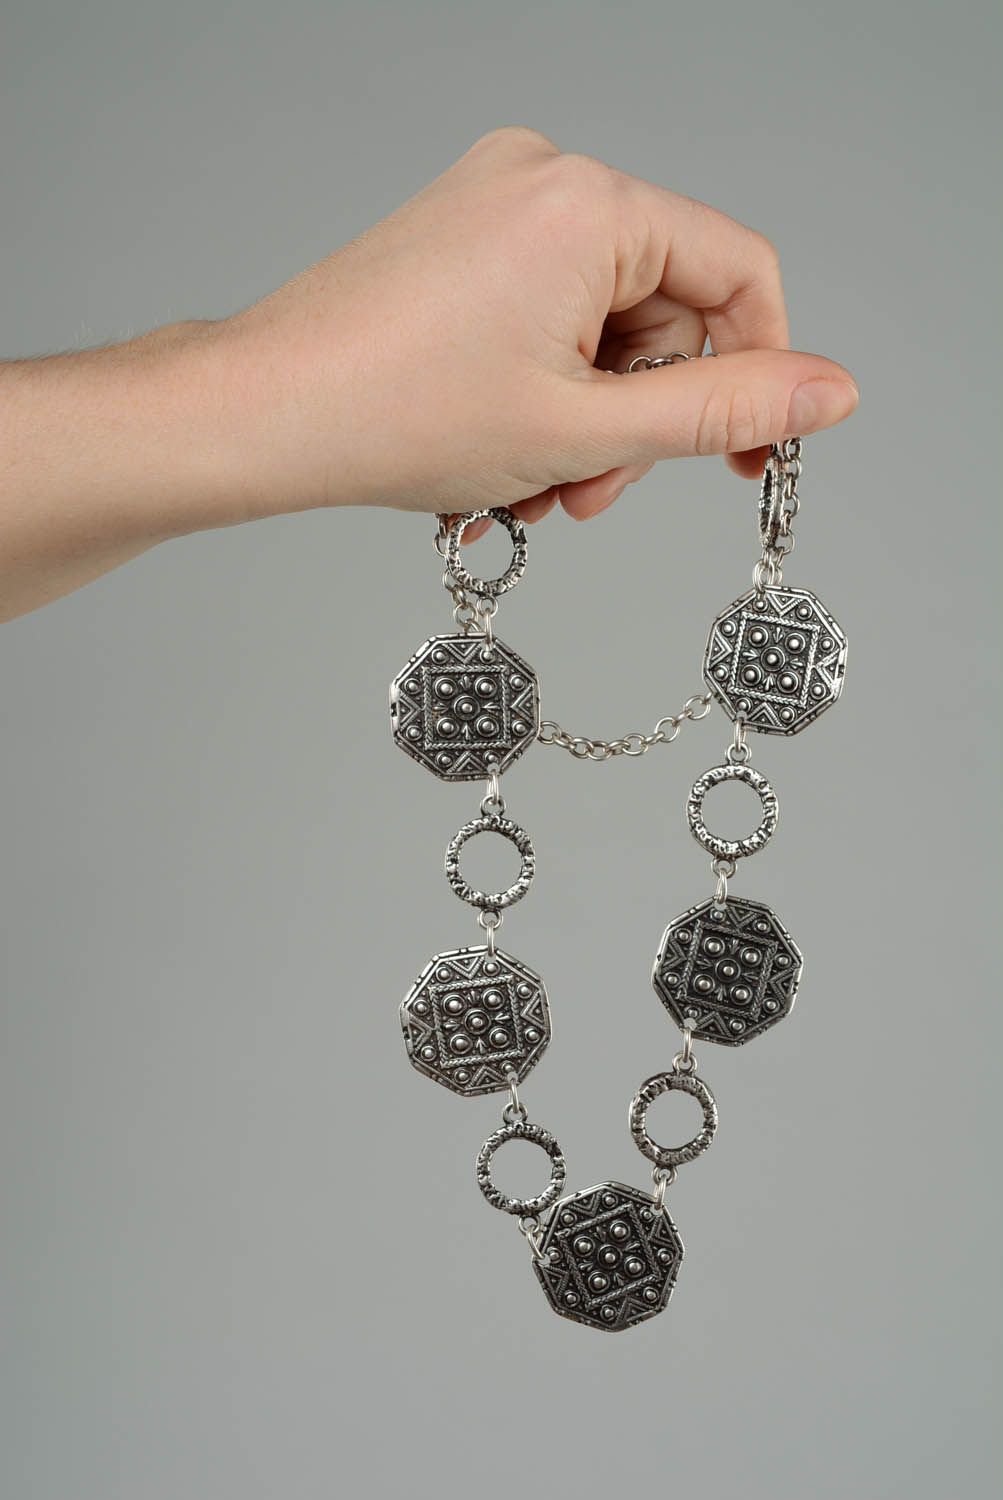 Handmade metal necklace photo 3